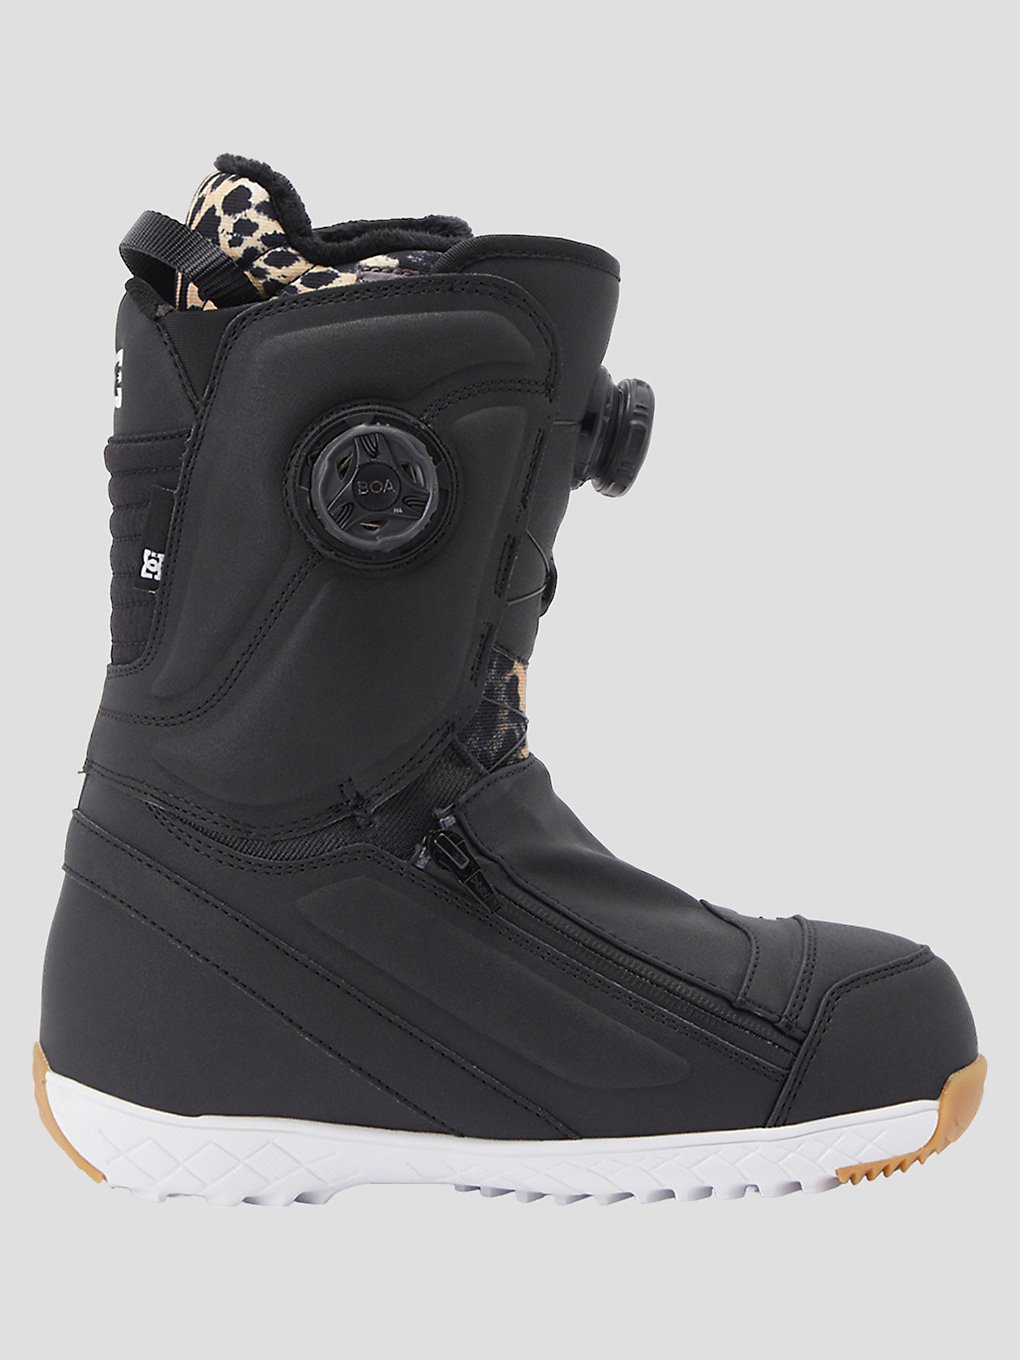 DC Mora BOA 2024 Snowboard-Boots leopard kaufen